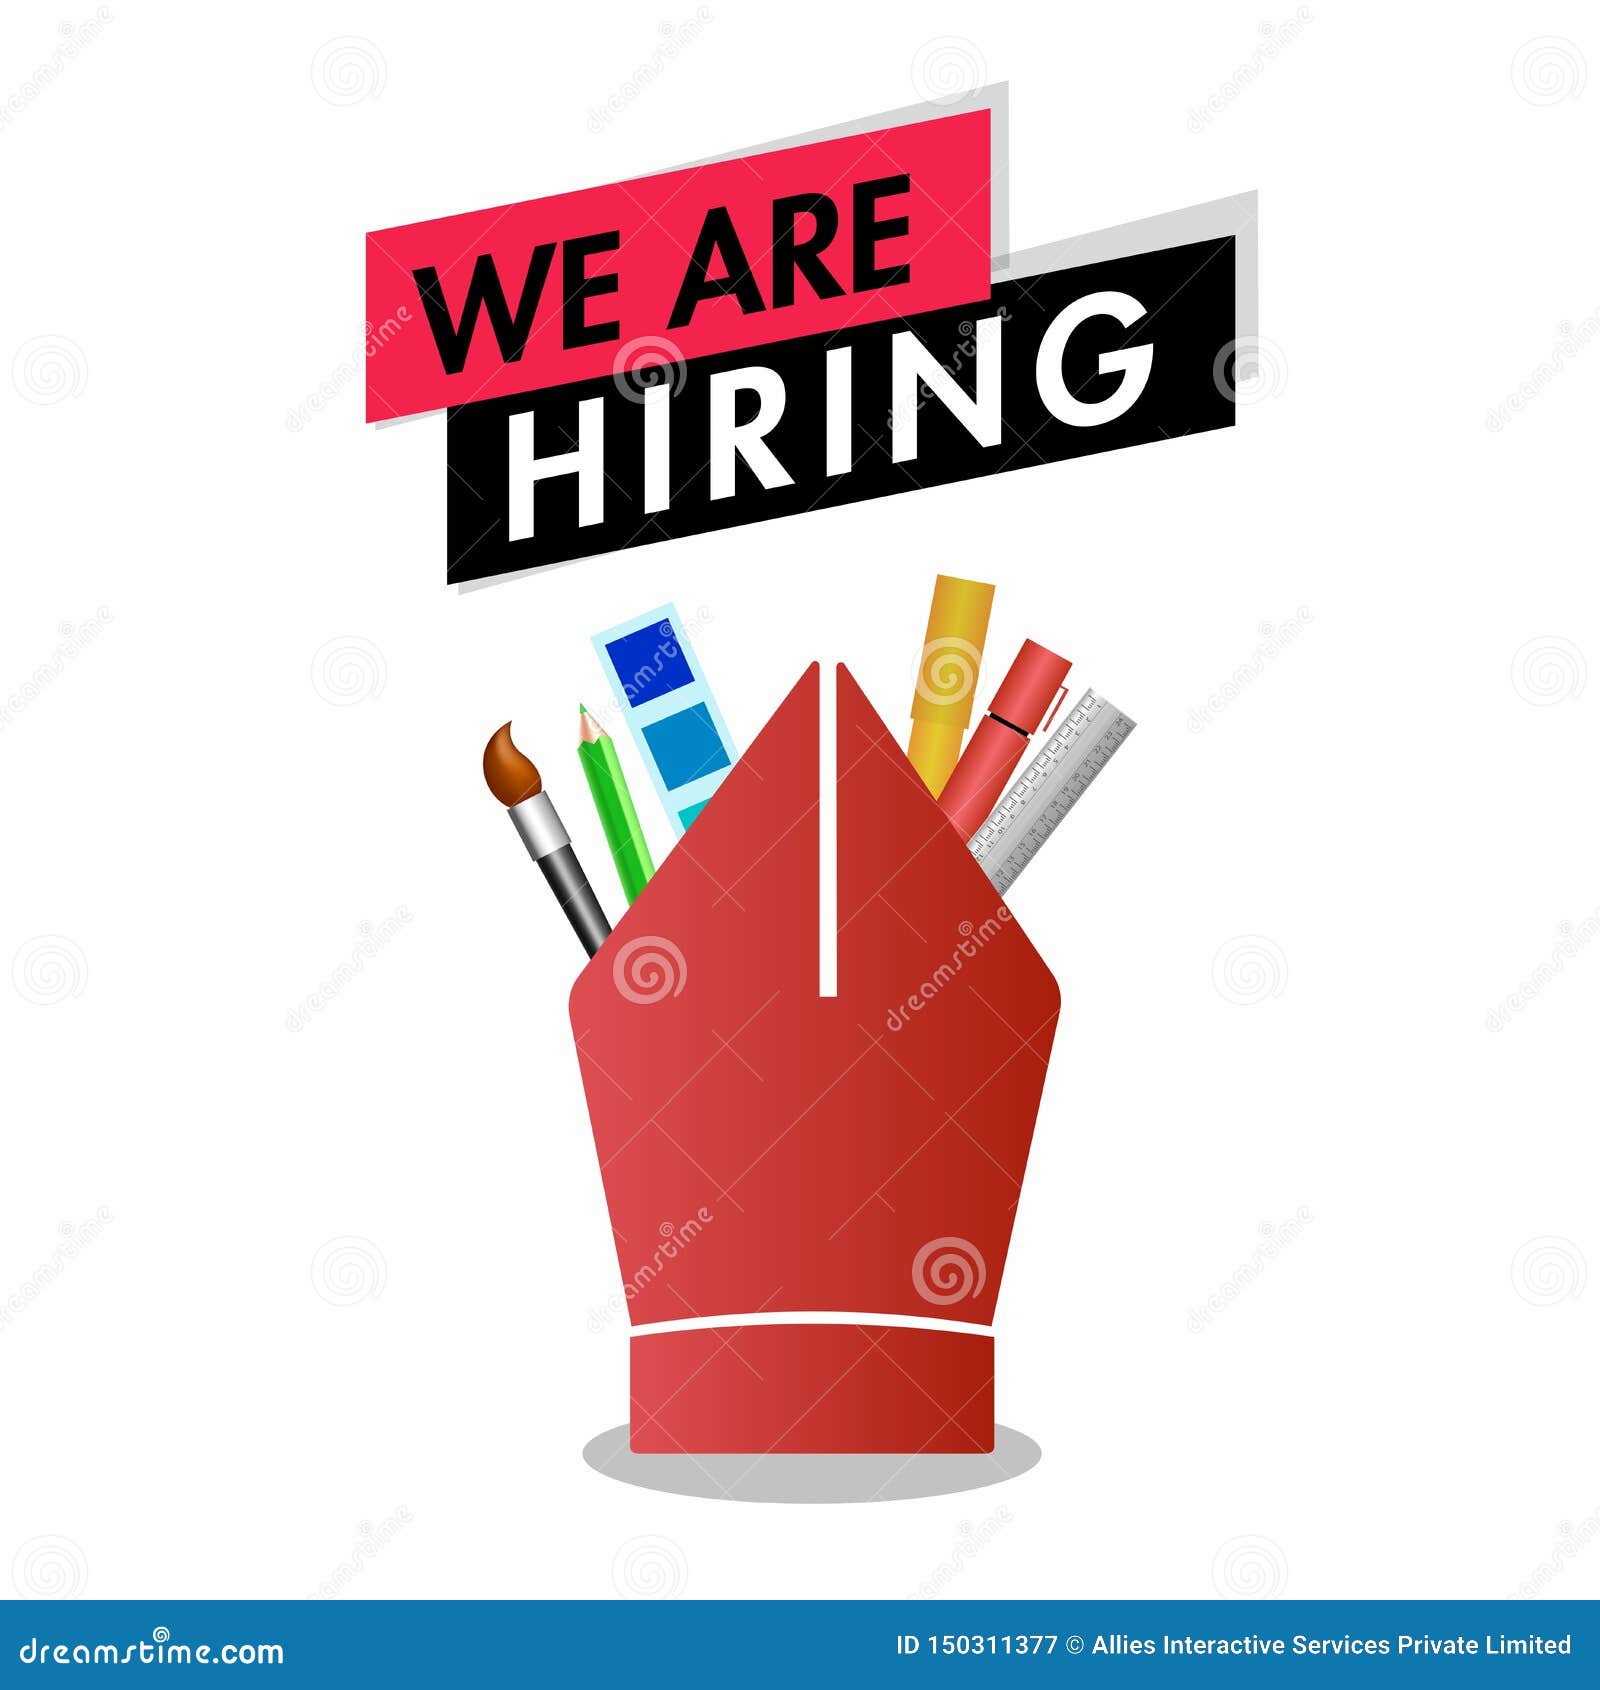 We Are Hiring Job Recruitment Poster Or Template Design Stock Illustration Illustration Of Advertisement Career 150311377